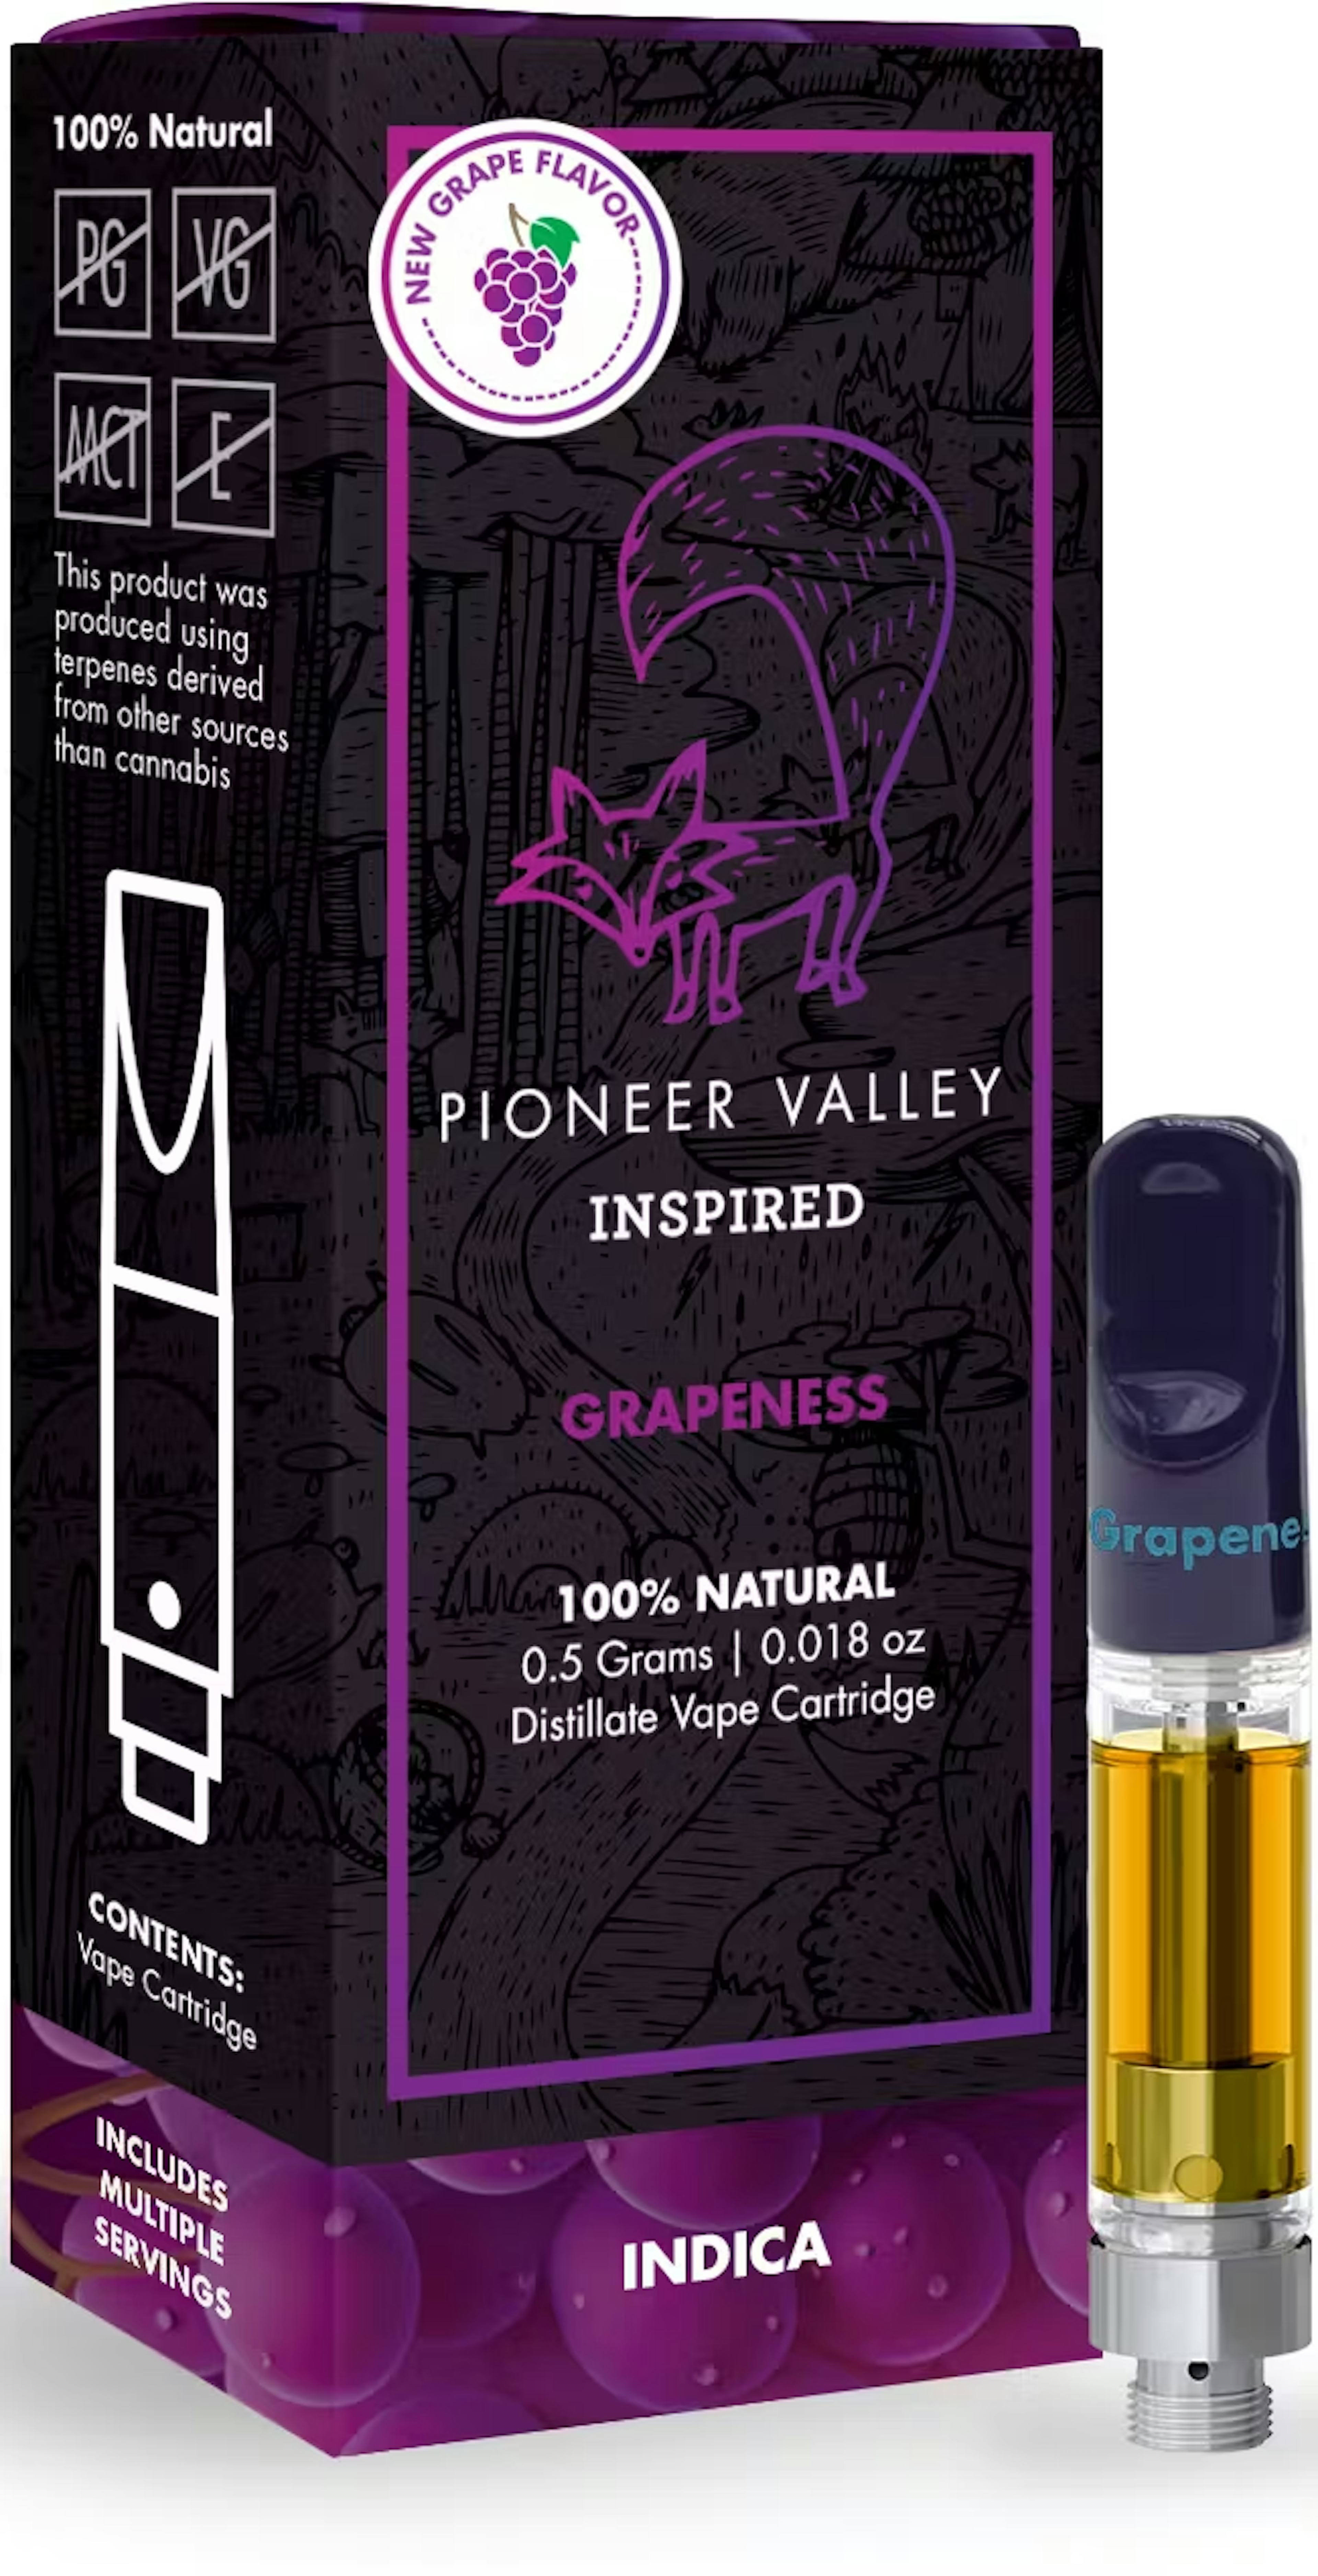 Grapeness (I) | Pioneer Valley | 0.5g 510 Cartridge